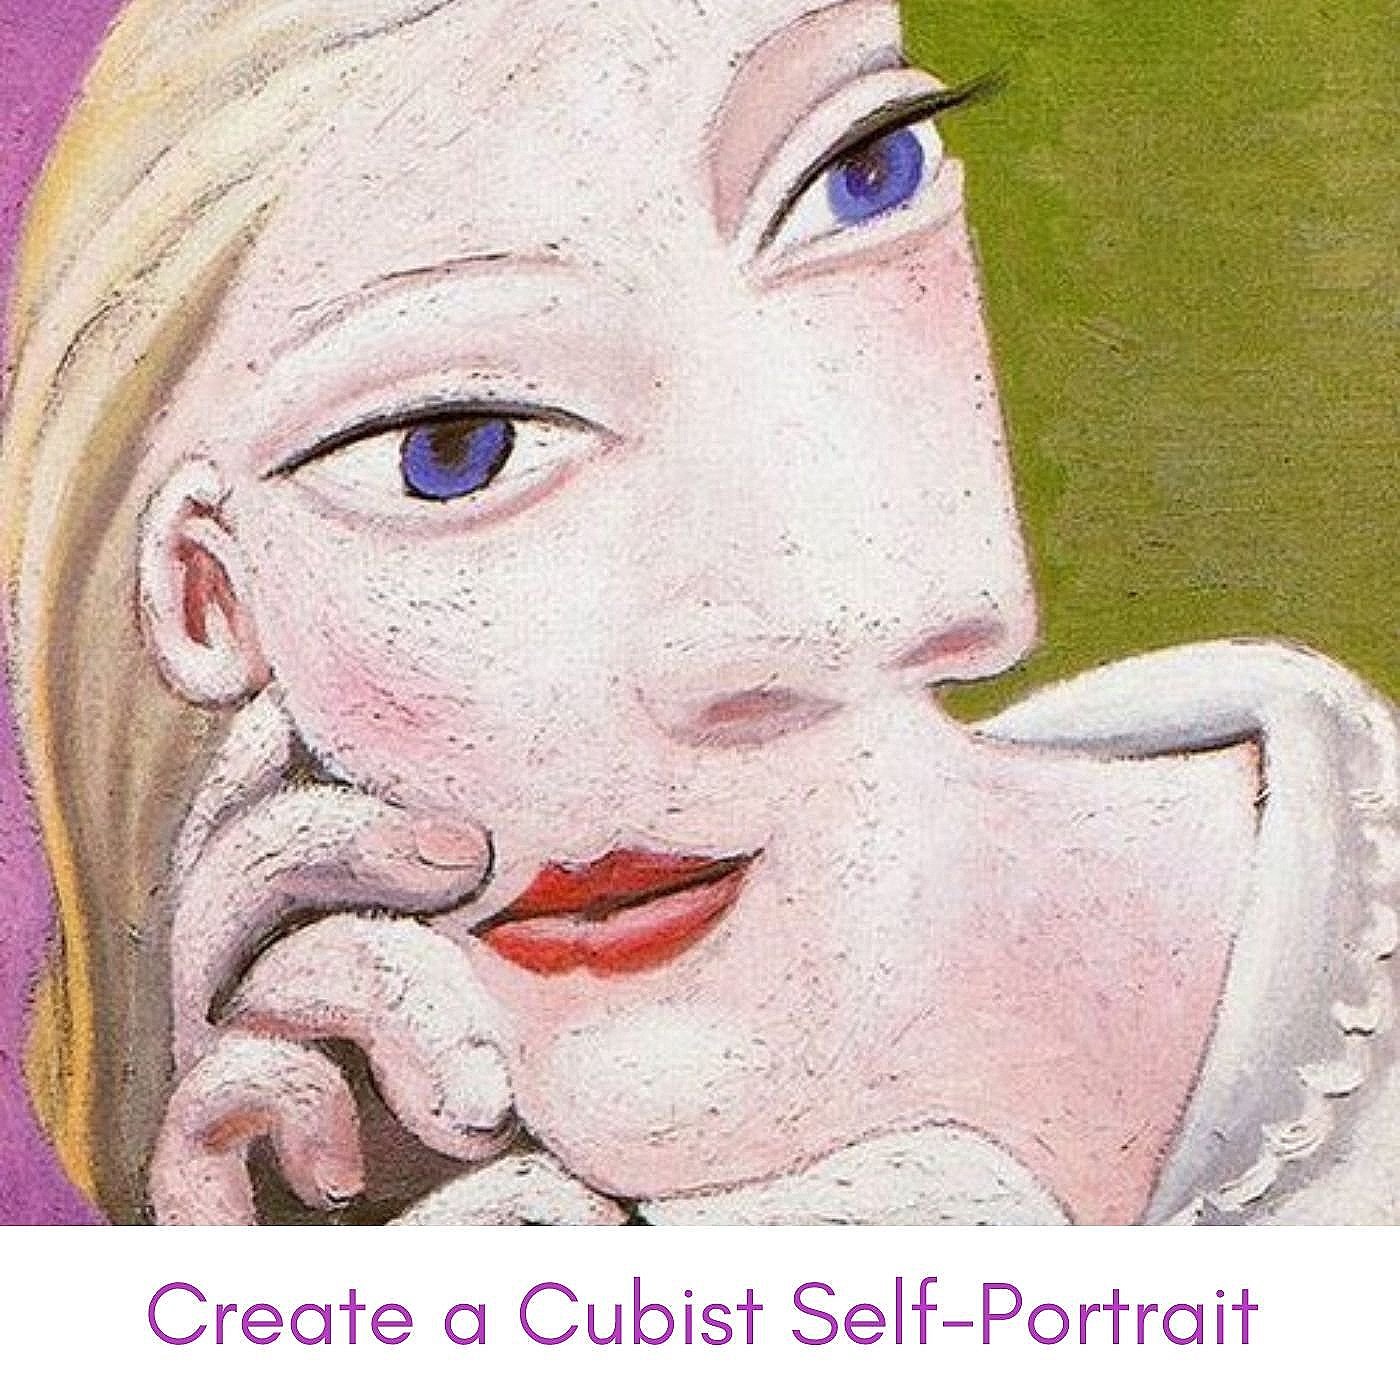 Express+Yourself-+Cubist+Self-Portrait+lf.jpg